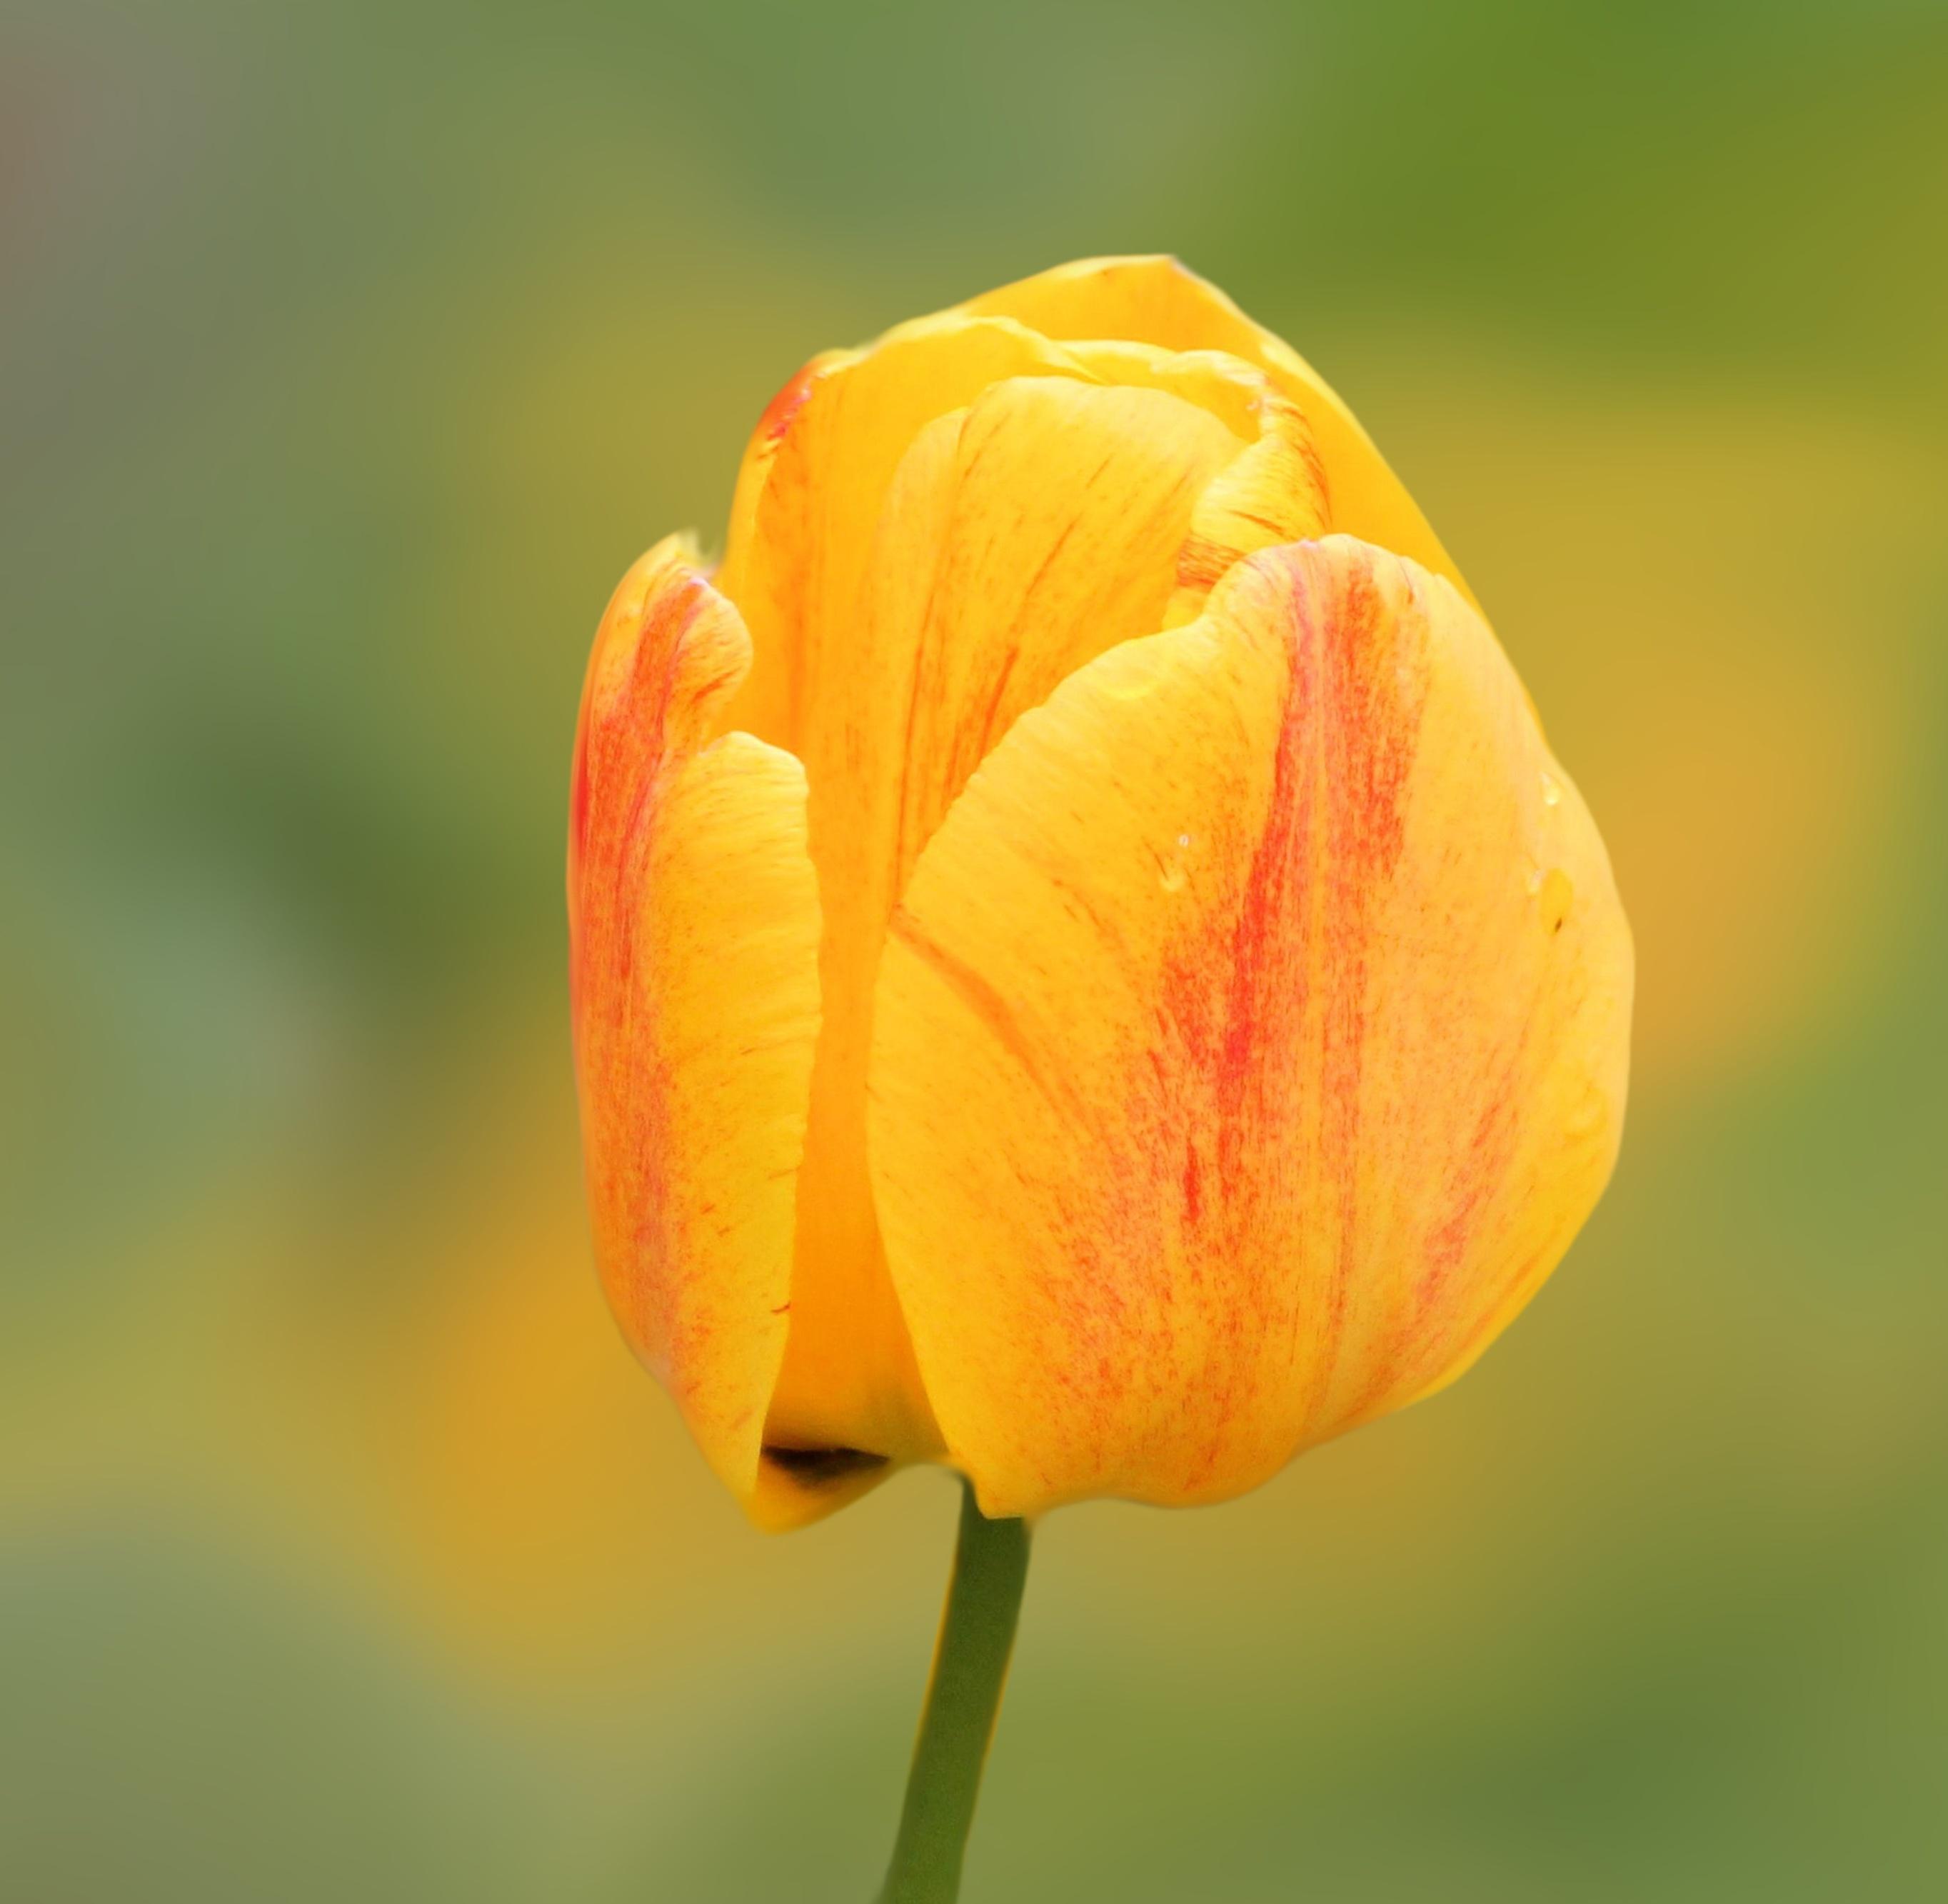 Tulip Darwin Hybrid 'Beauty of Apeldoorn' - Tulip from Leo Berbee Bulb Company